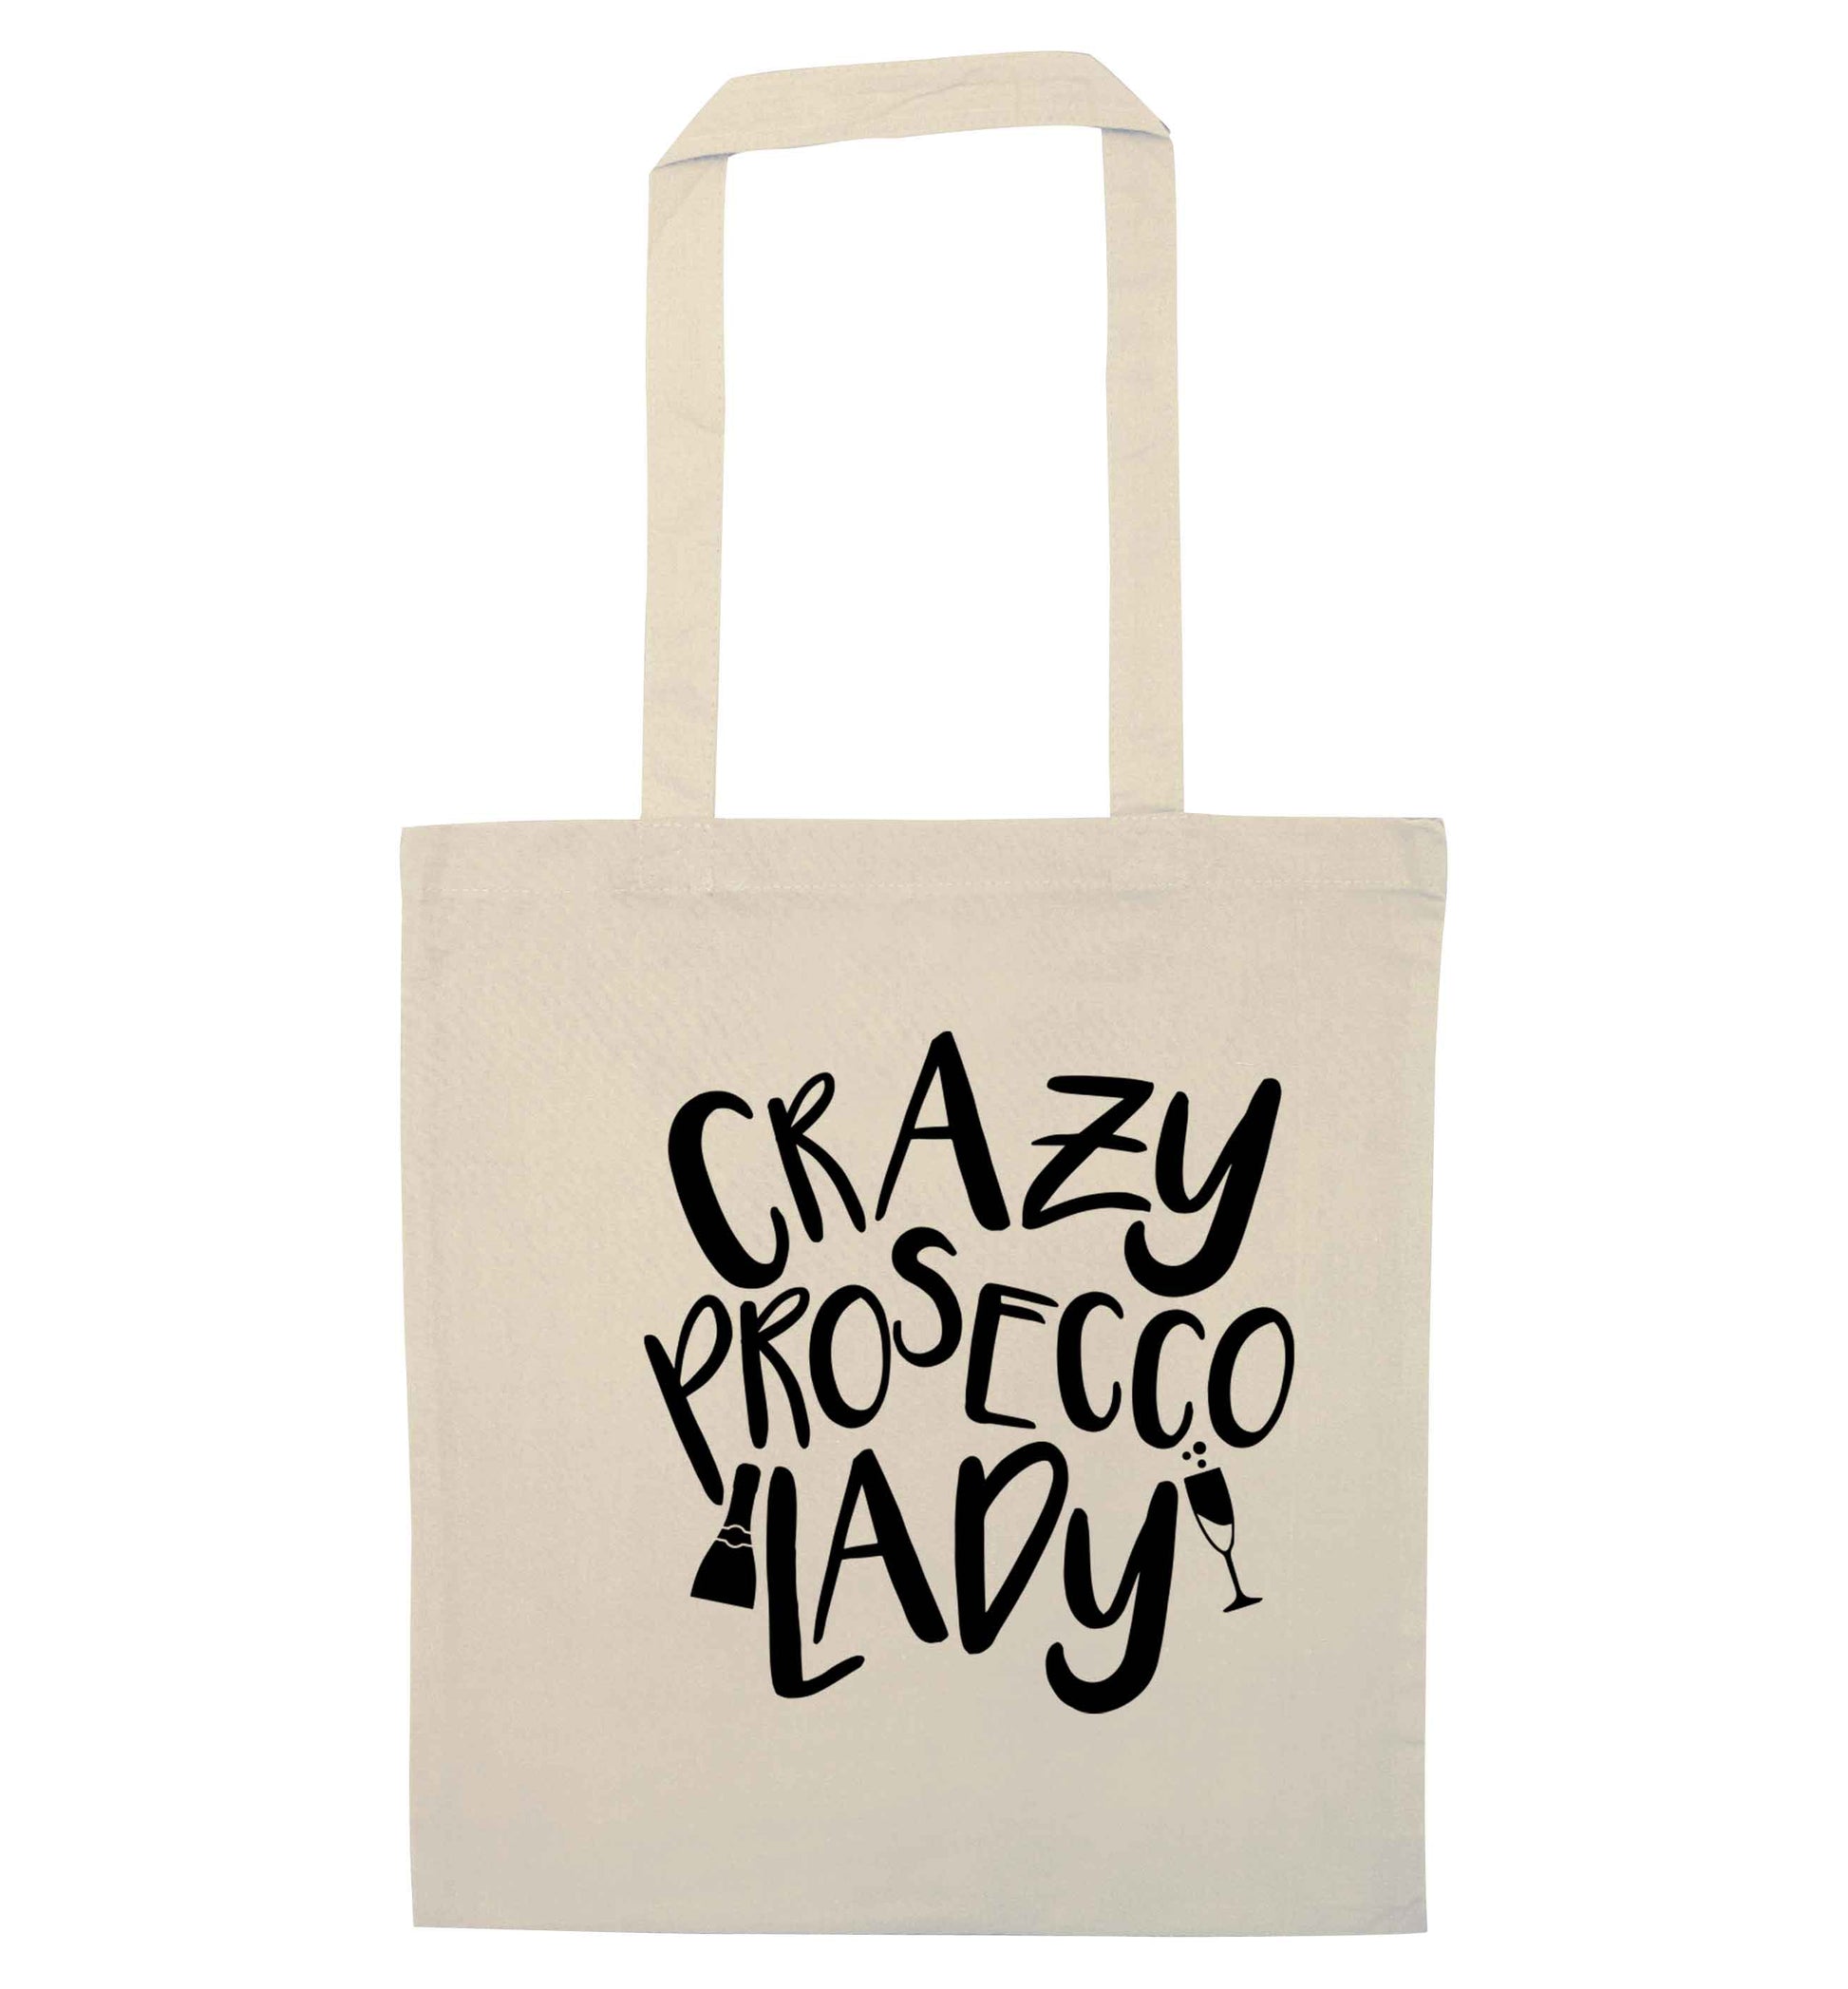 Crazy prosecco lady natural tote bag